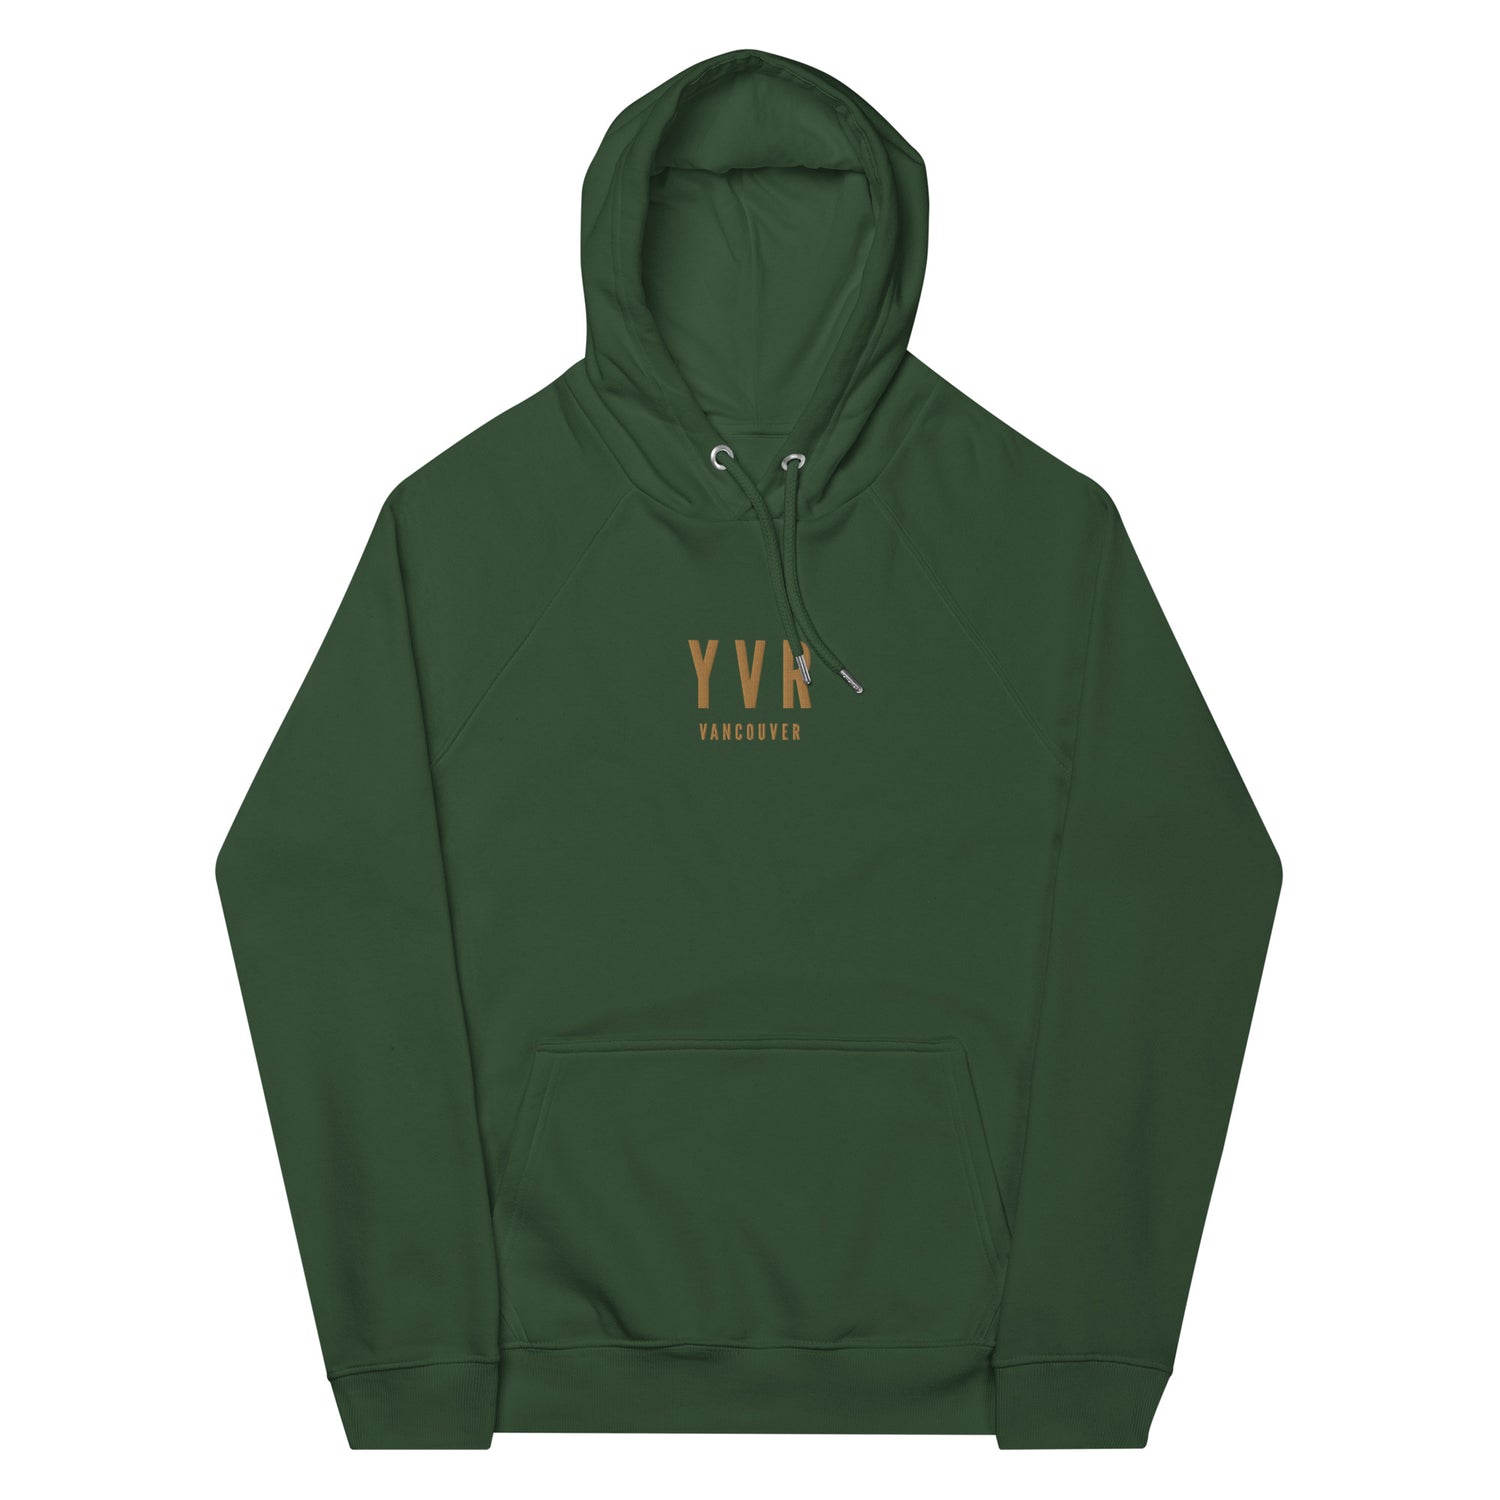 Vancouver British Columbia Hoodies and Sweatshirts • YVR Airport Code